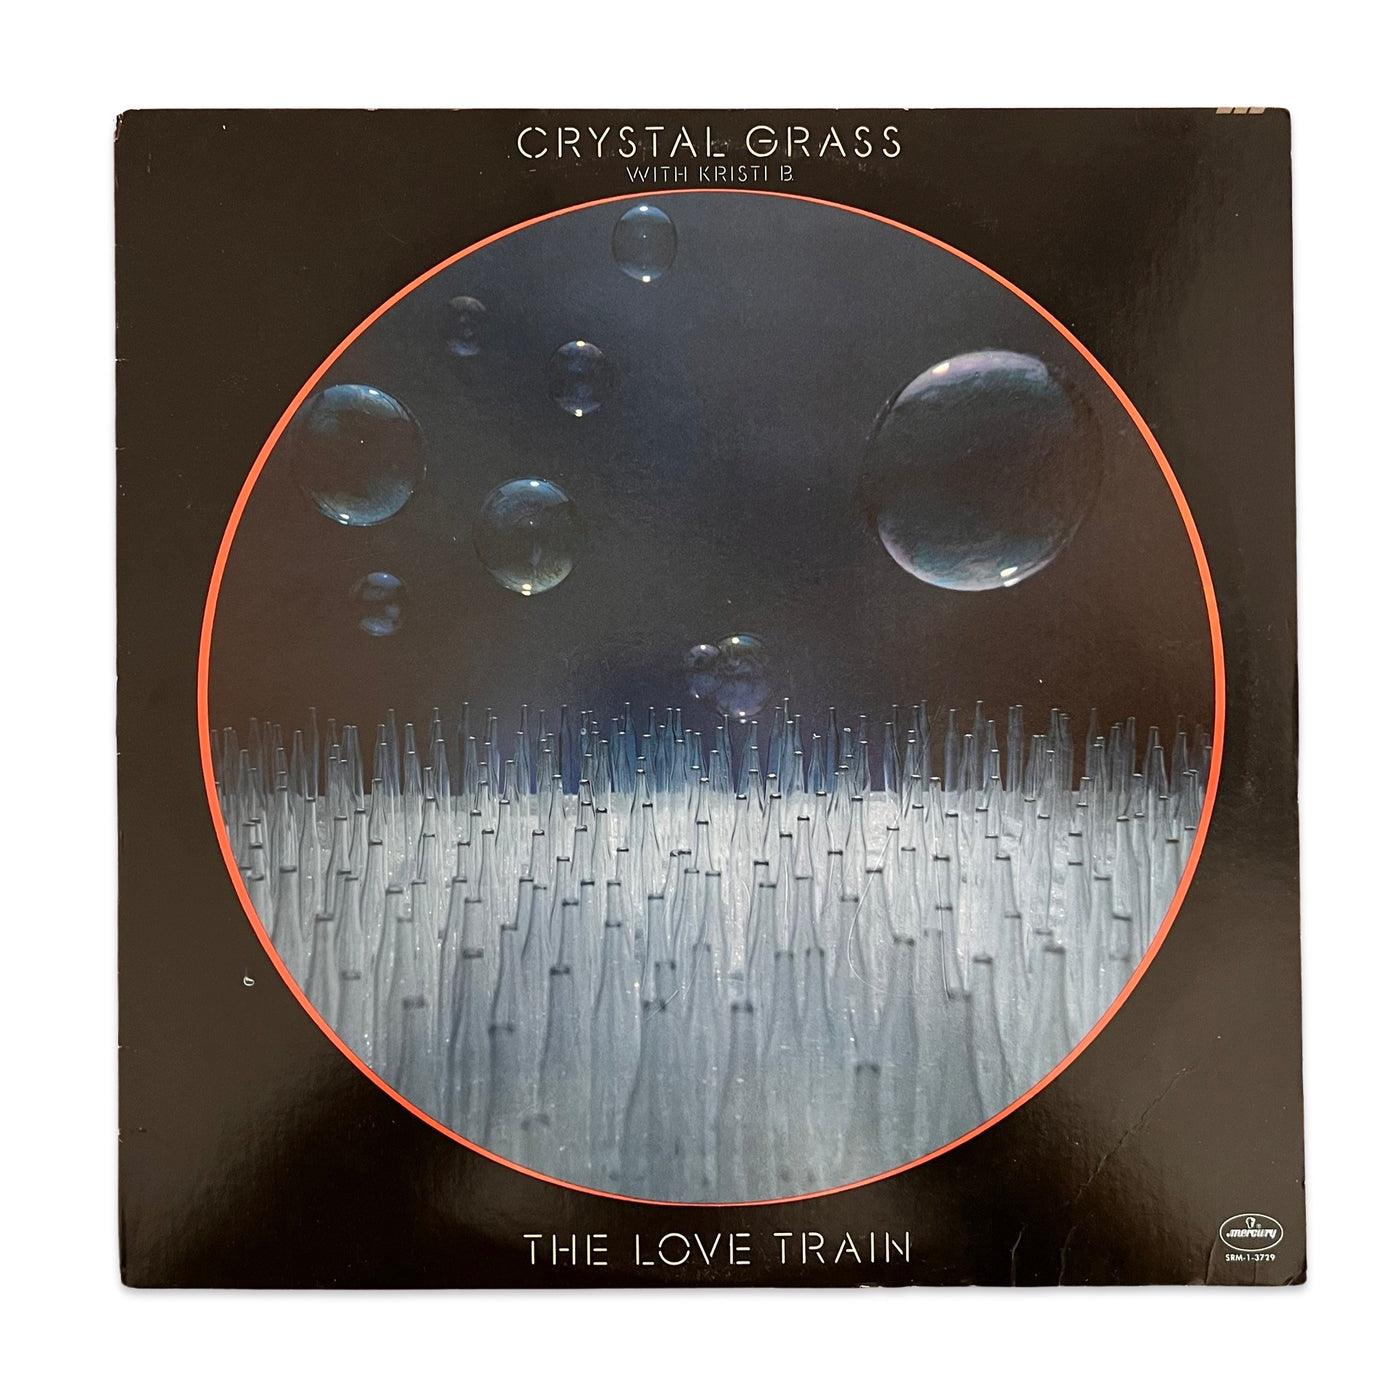 Crystal Grass With Kristi B. – The Love Train (1978)